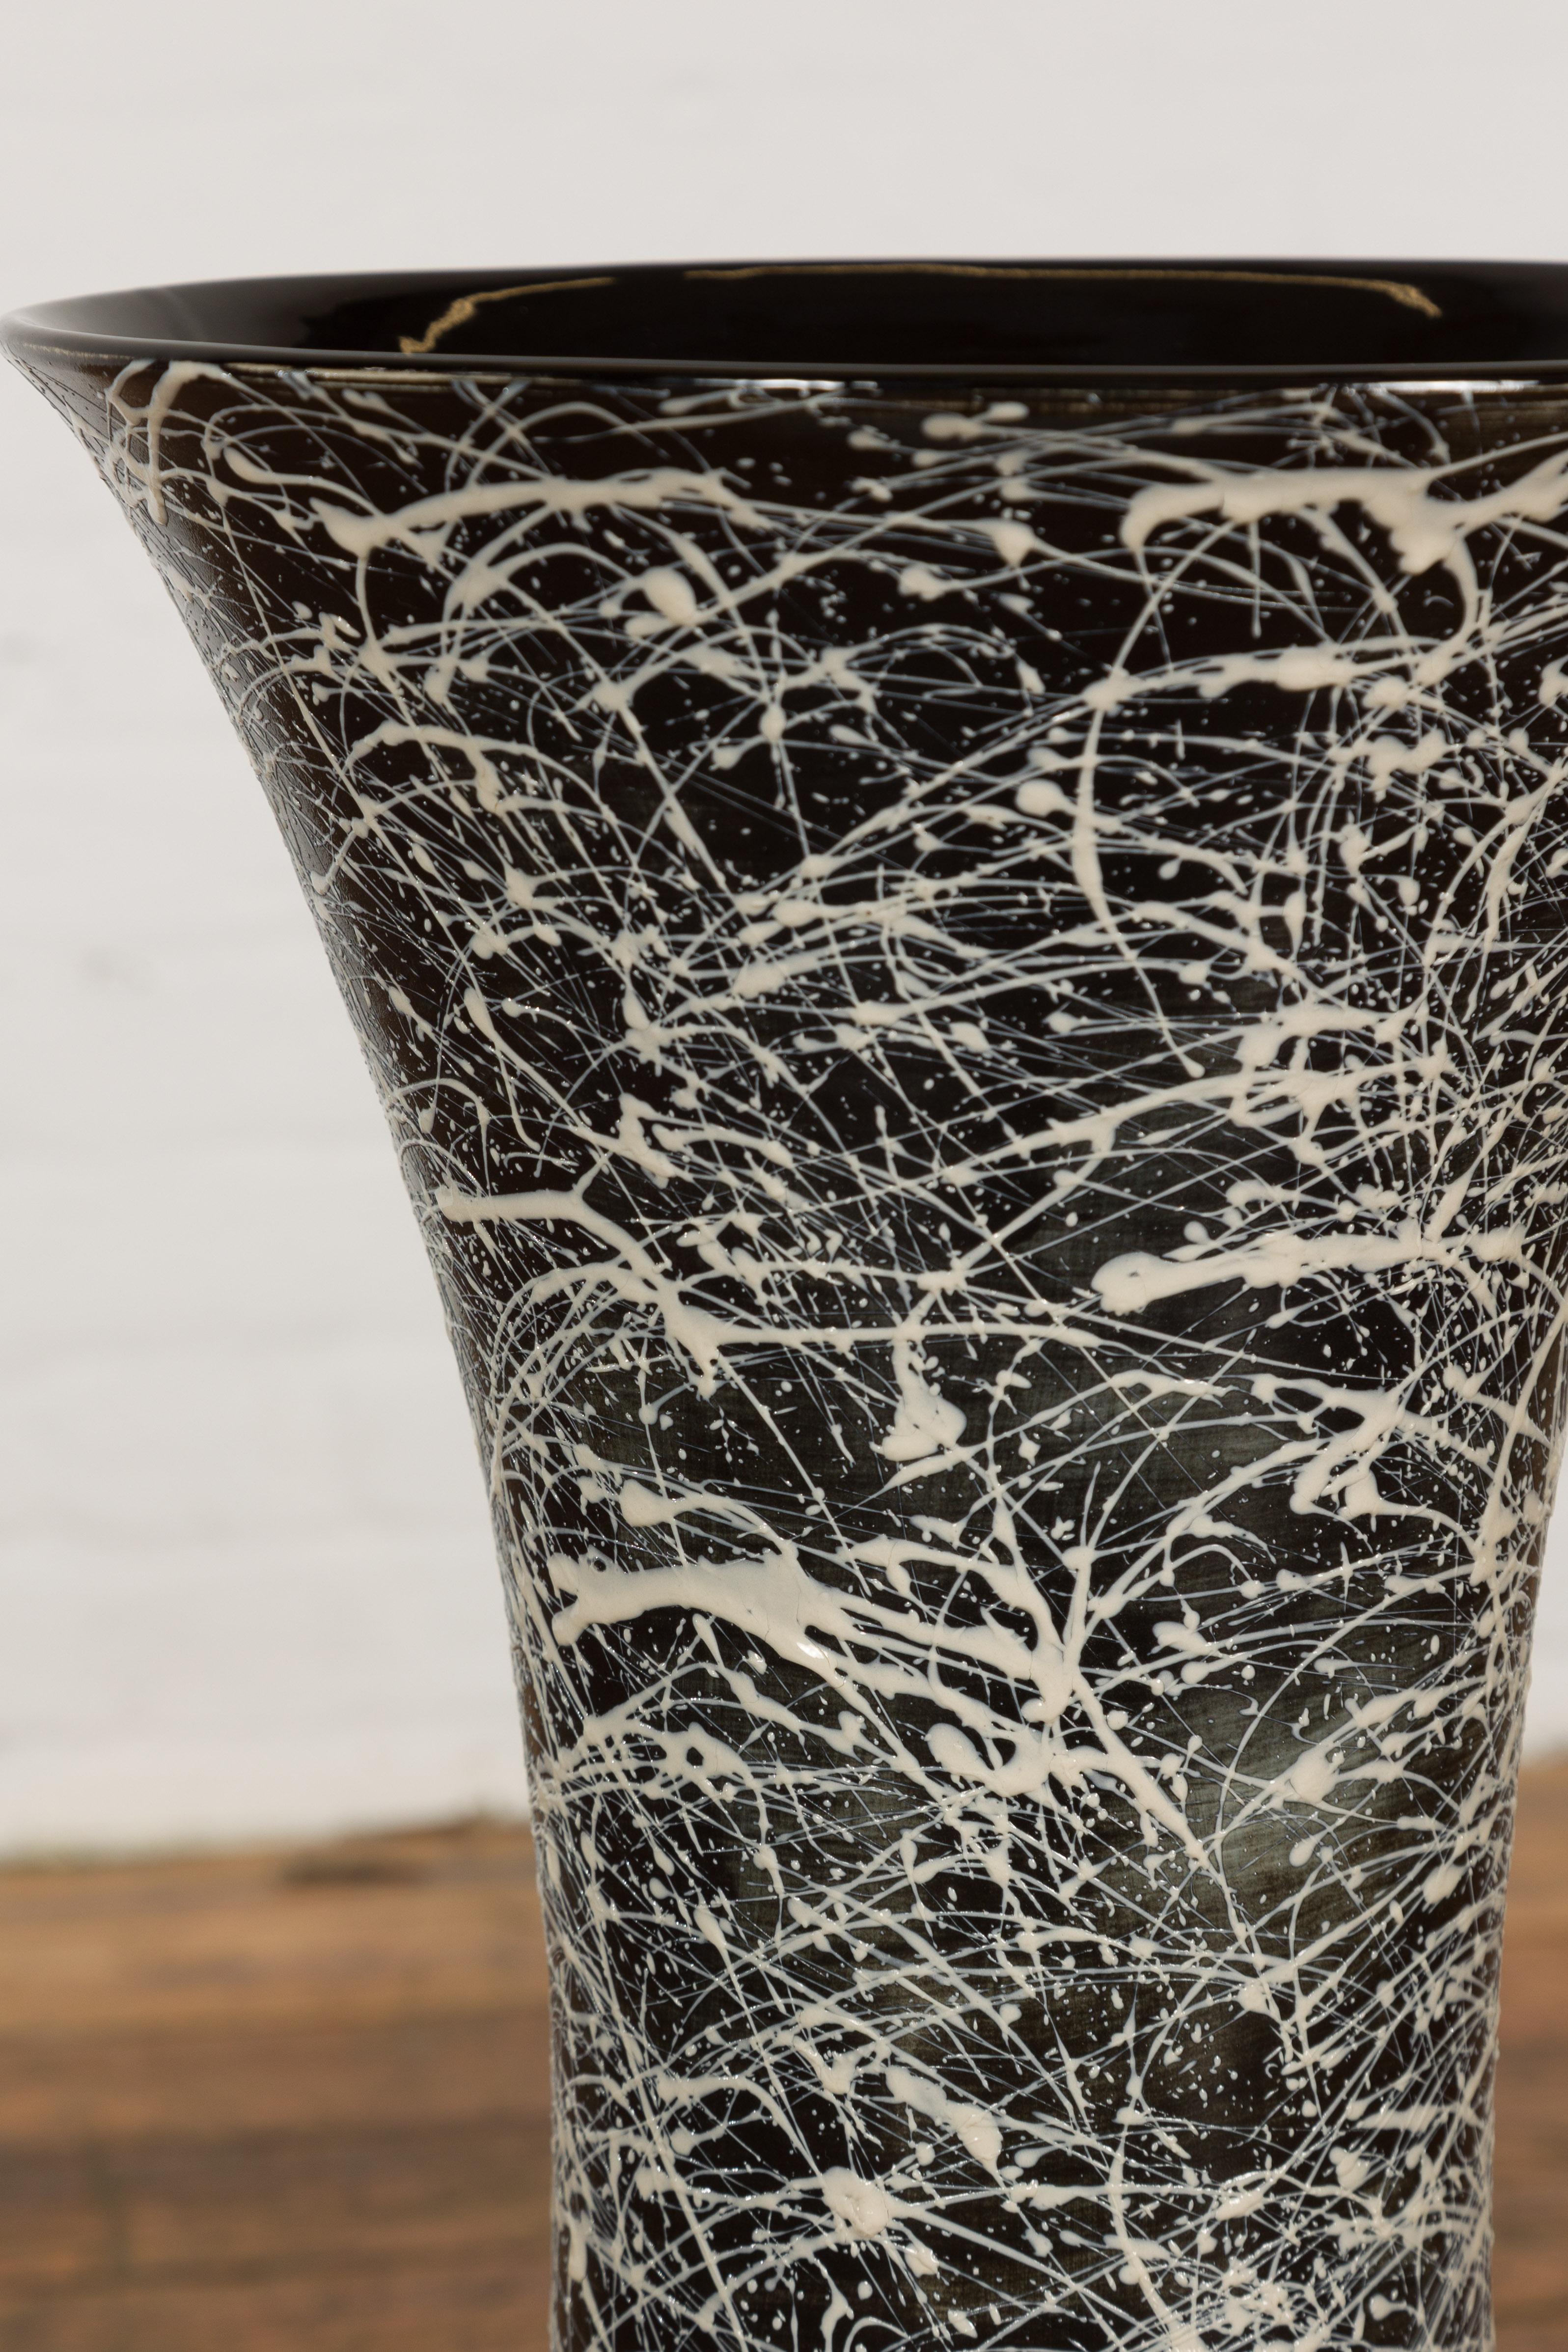 Trumpet Shaped Textured Black and White Splattered Ceramic Planter For Sale 5